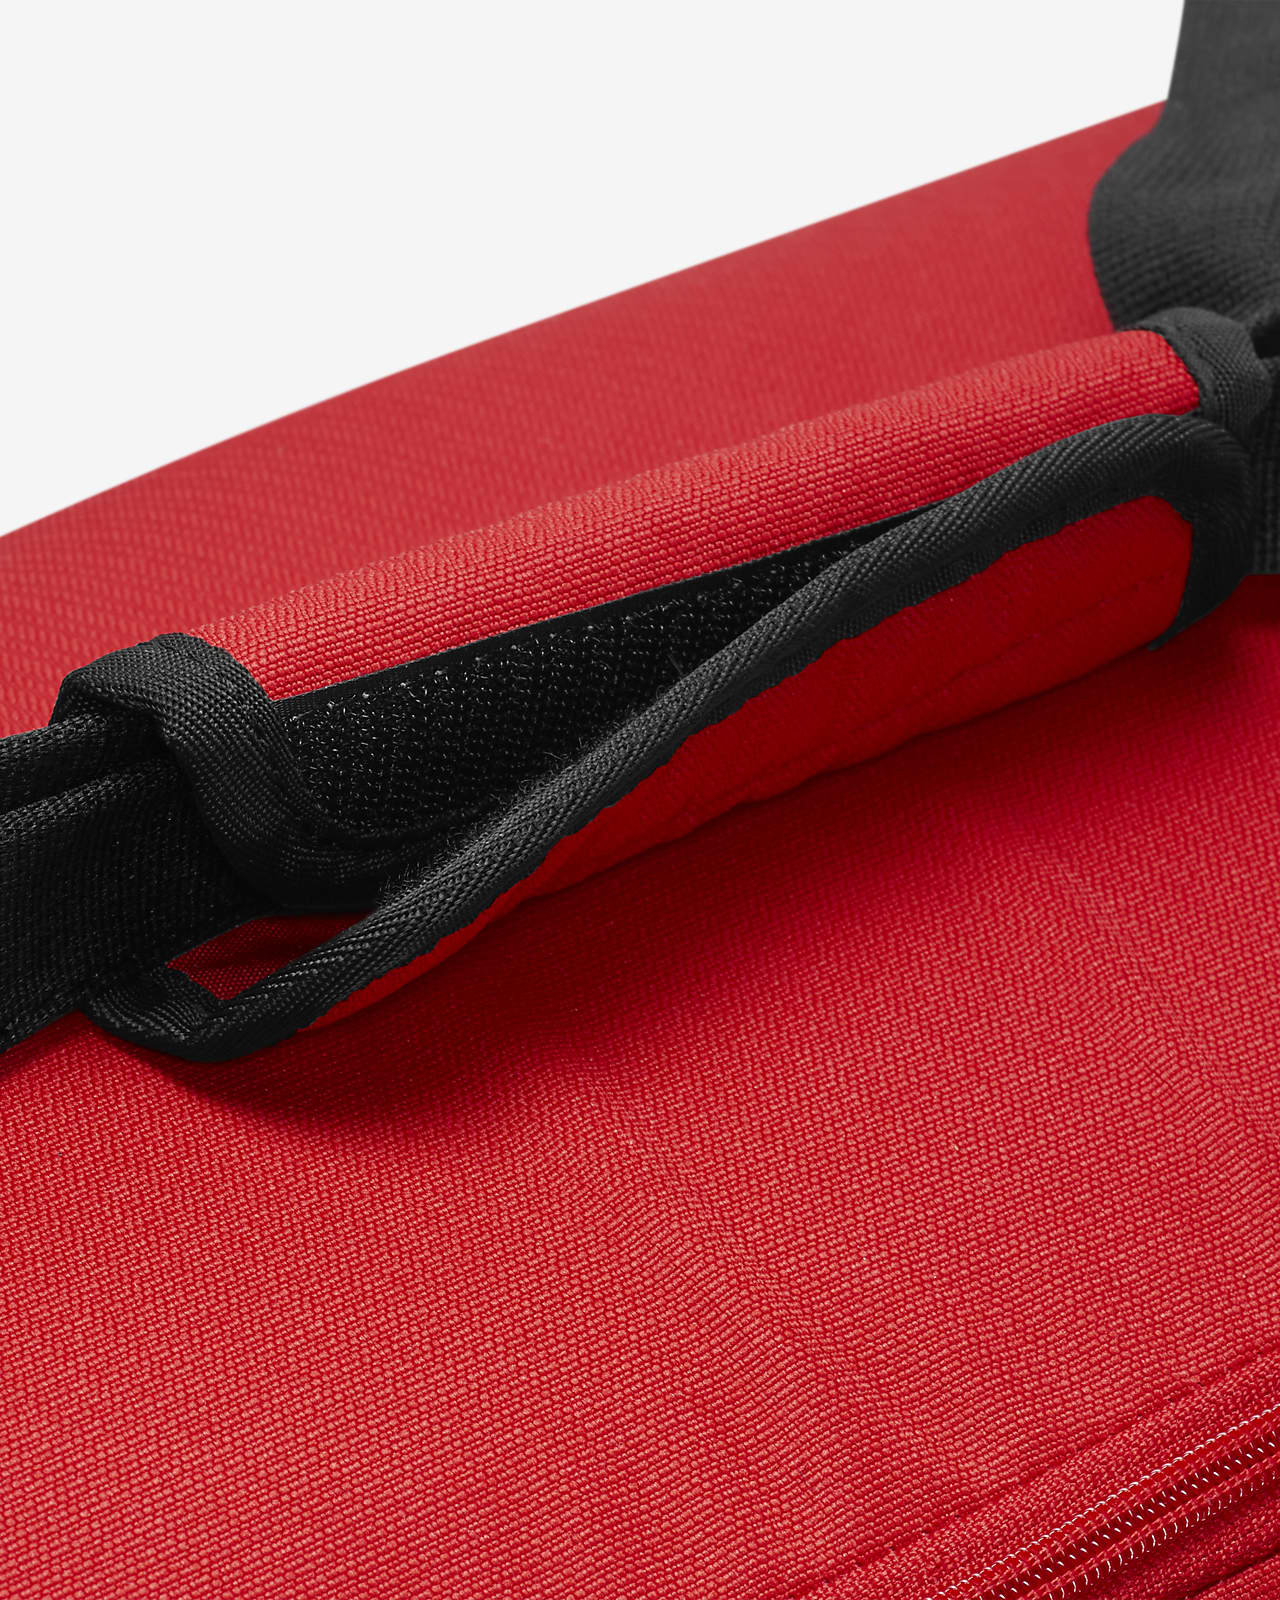 Nike Brasilia 9.5 Mens Training Duffel Bag Black Size Medium 41 Litre  Sportswear